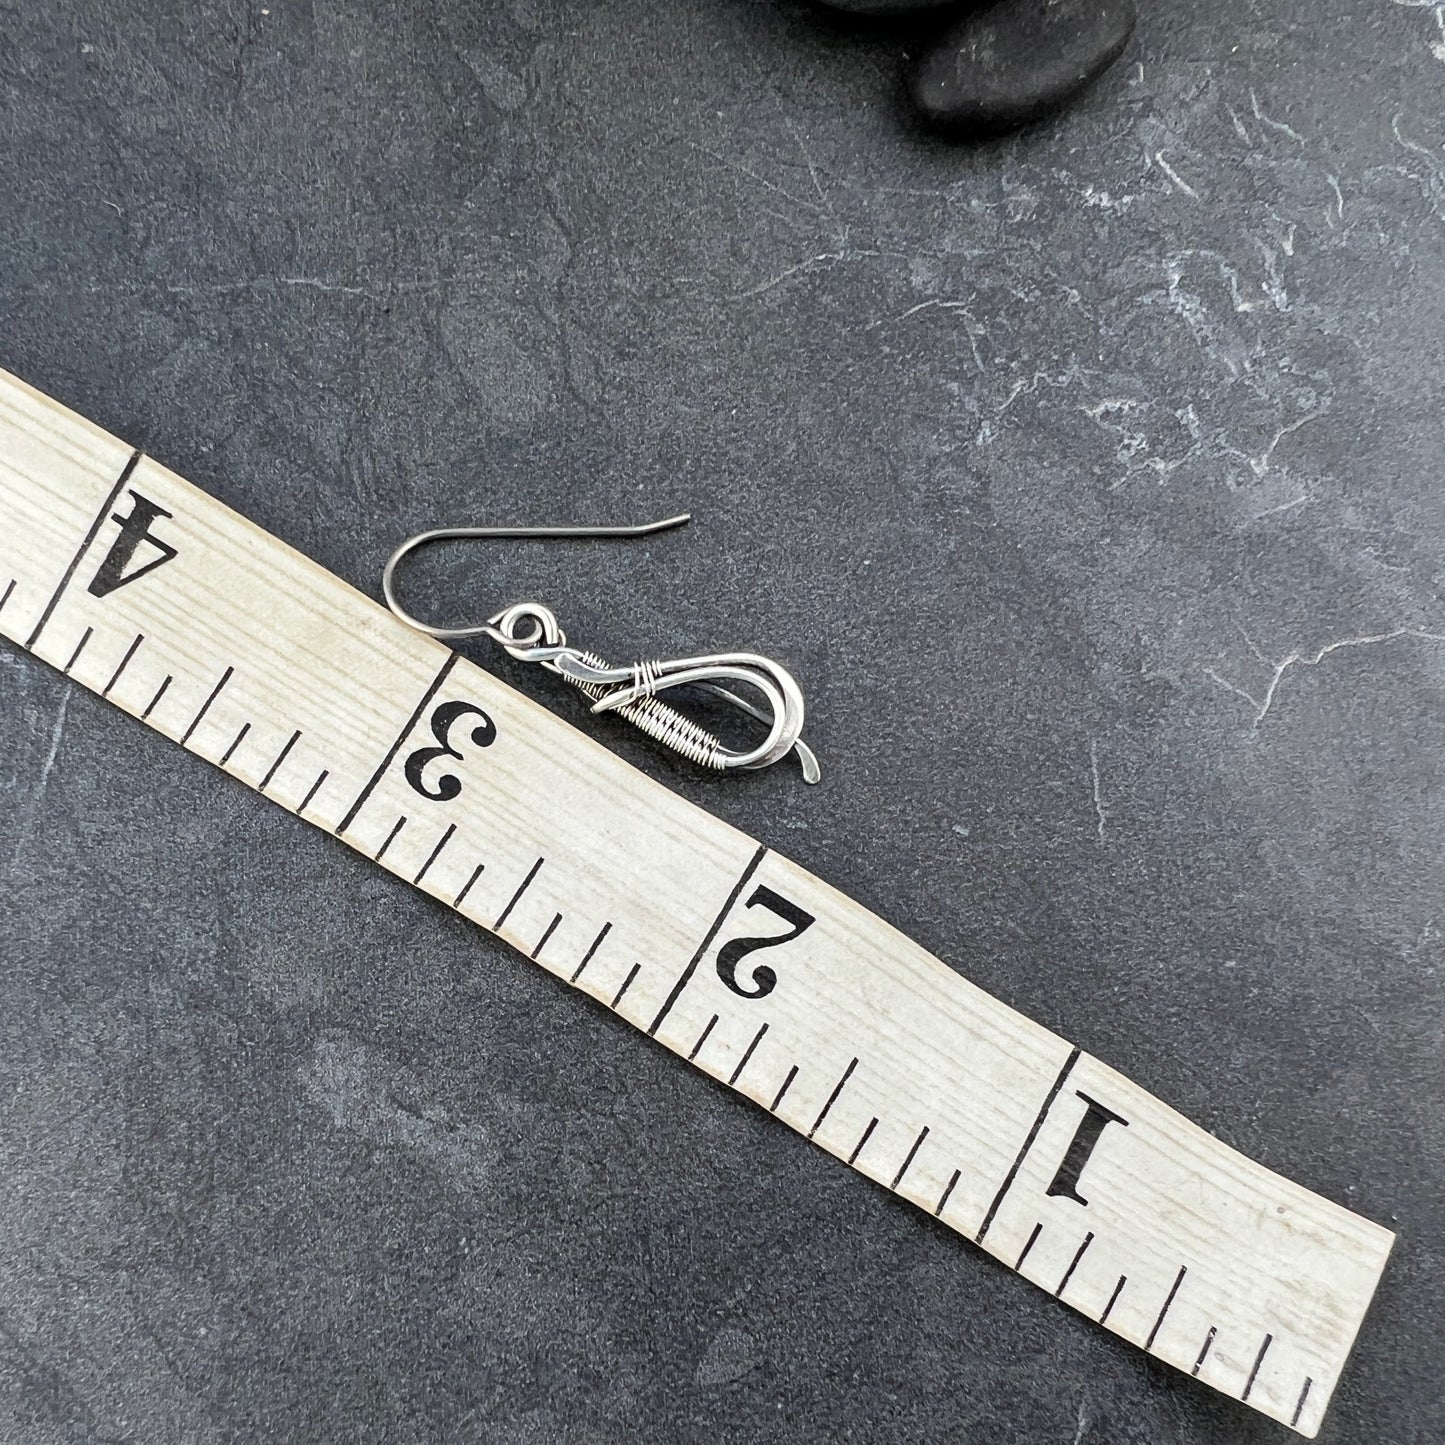 Handcrafted Sterling Silver Tear Drop Earrings | Intricate Wire Woven Design